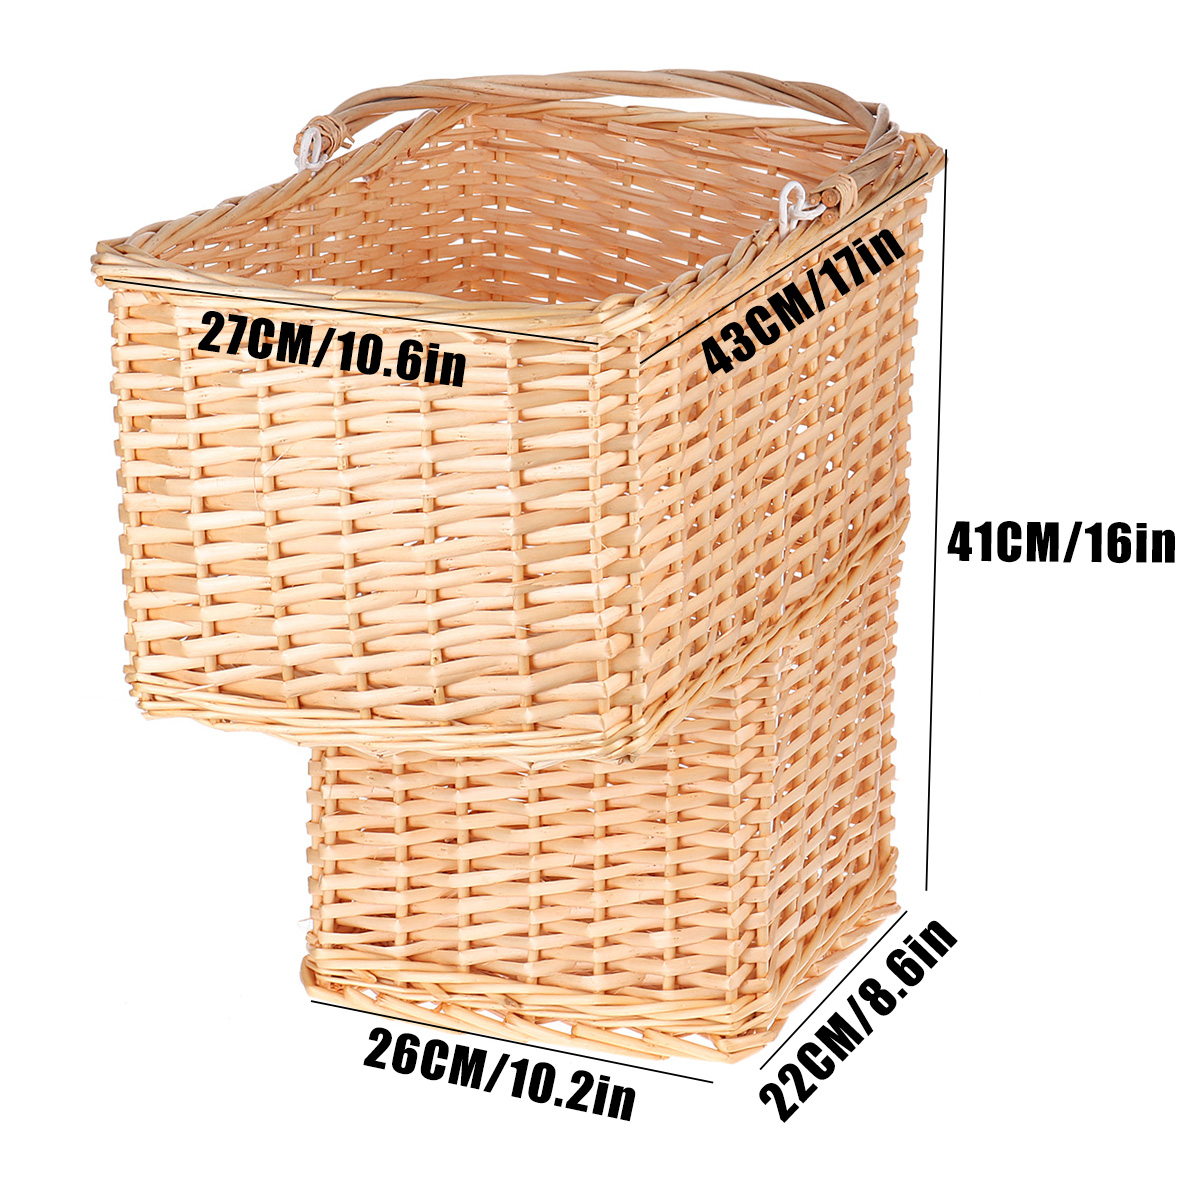 Willow-Woven-Basket-Box-Seagrass-Storage-Hamper-Laundry-Holder-Home-Organizer-1688975-7